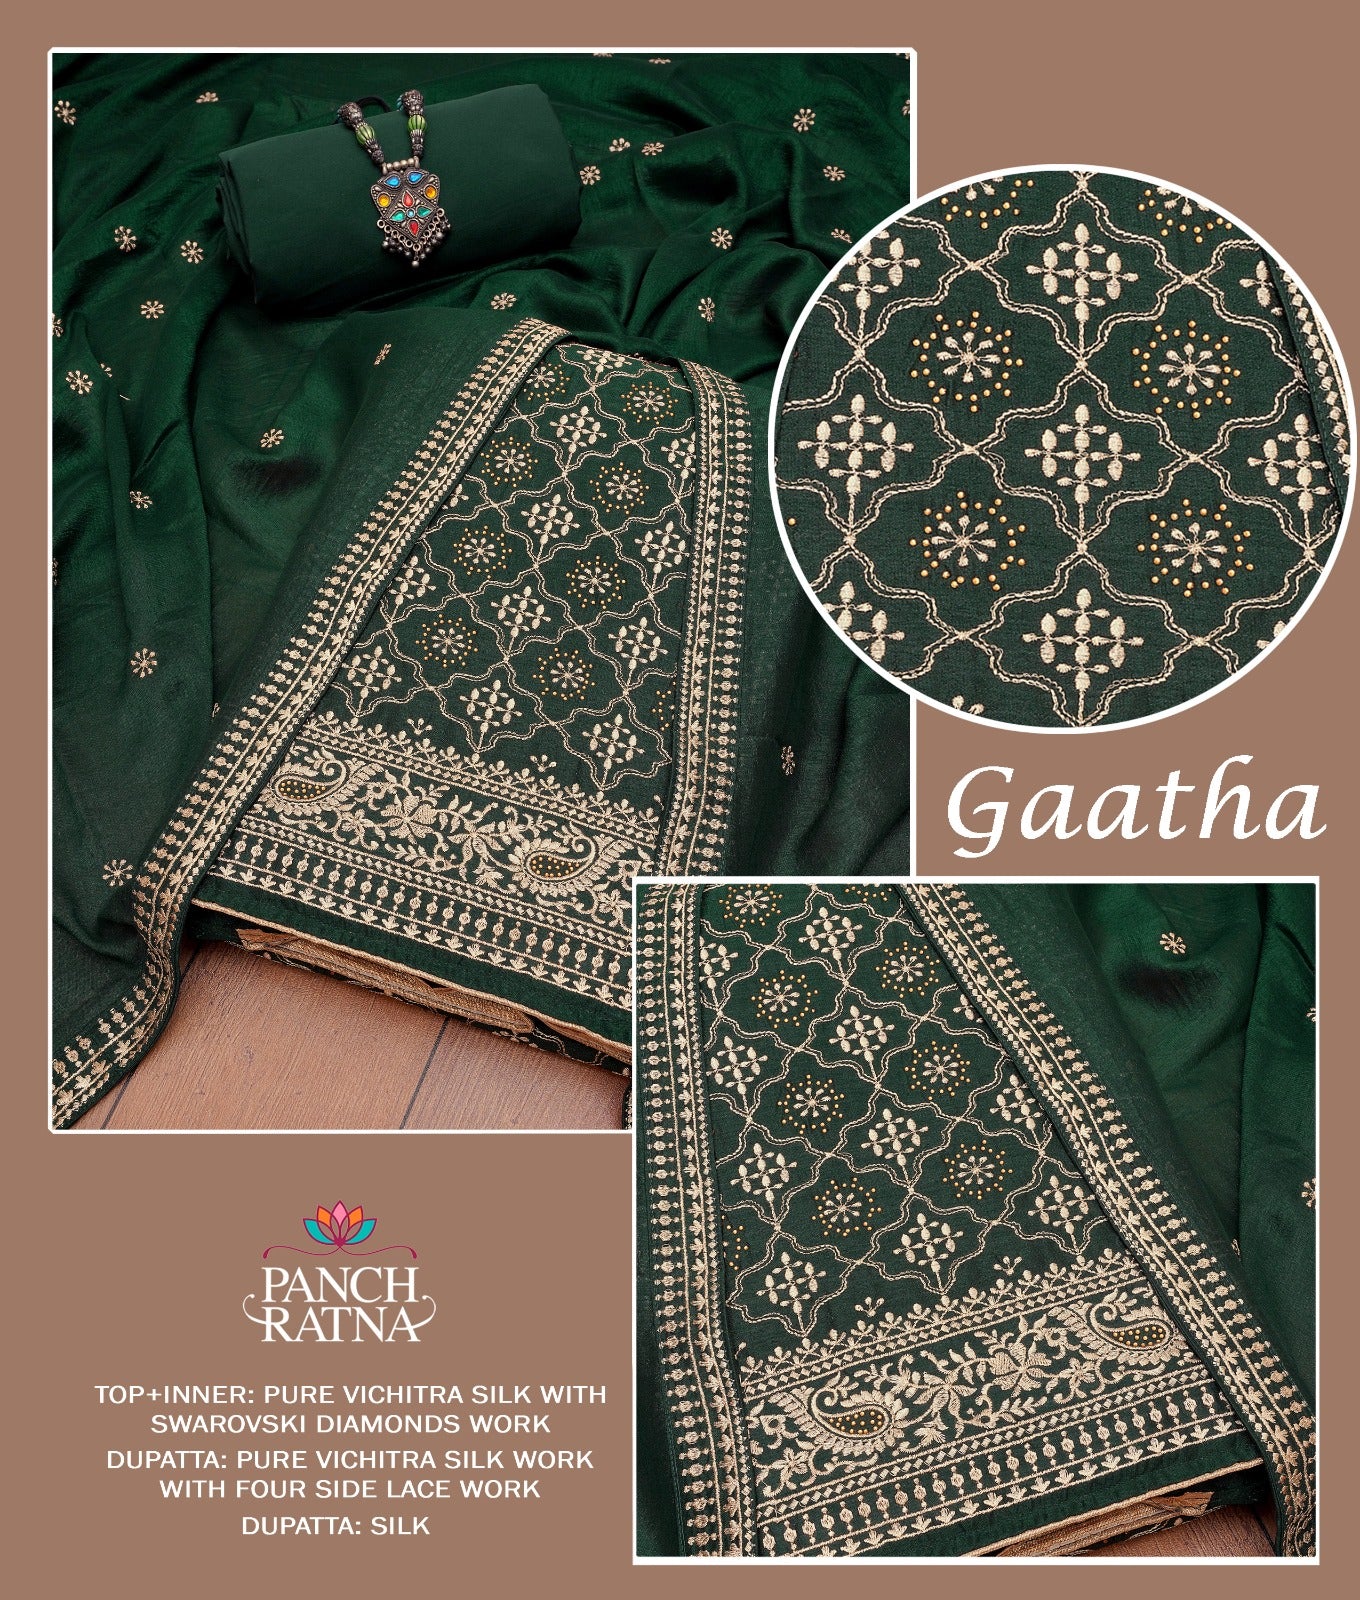 Gaatha Panch Ratna Vichitra Silk Salwar Suits